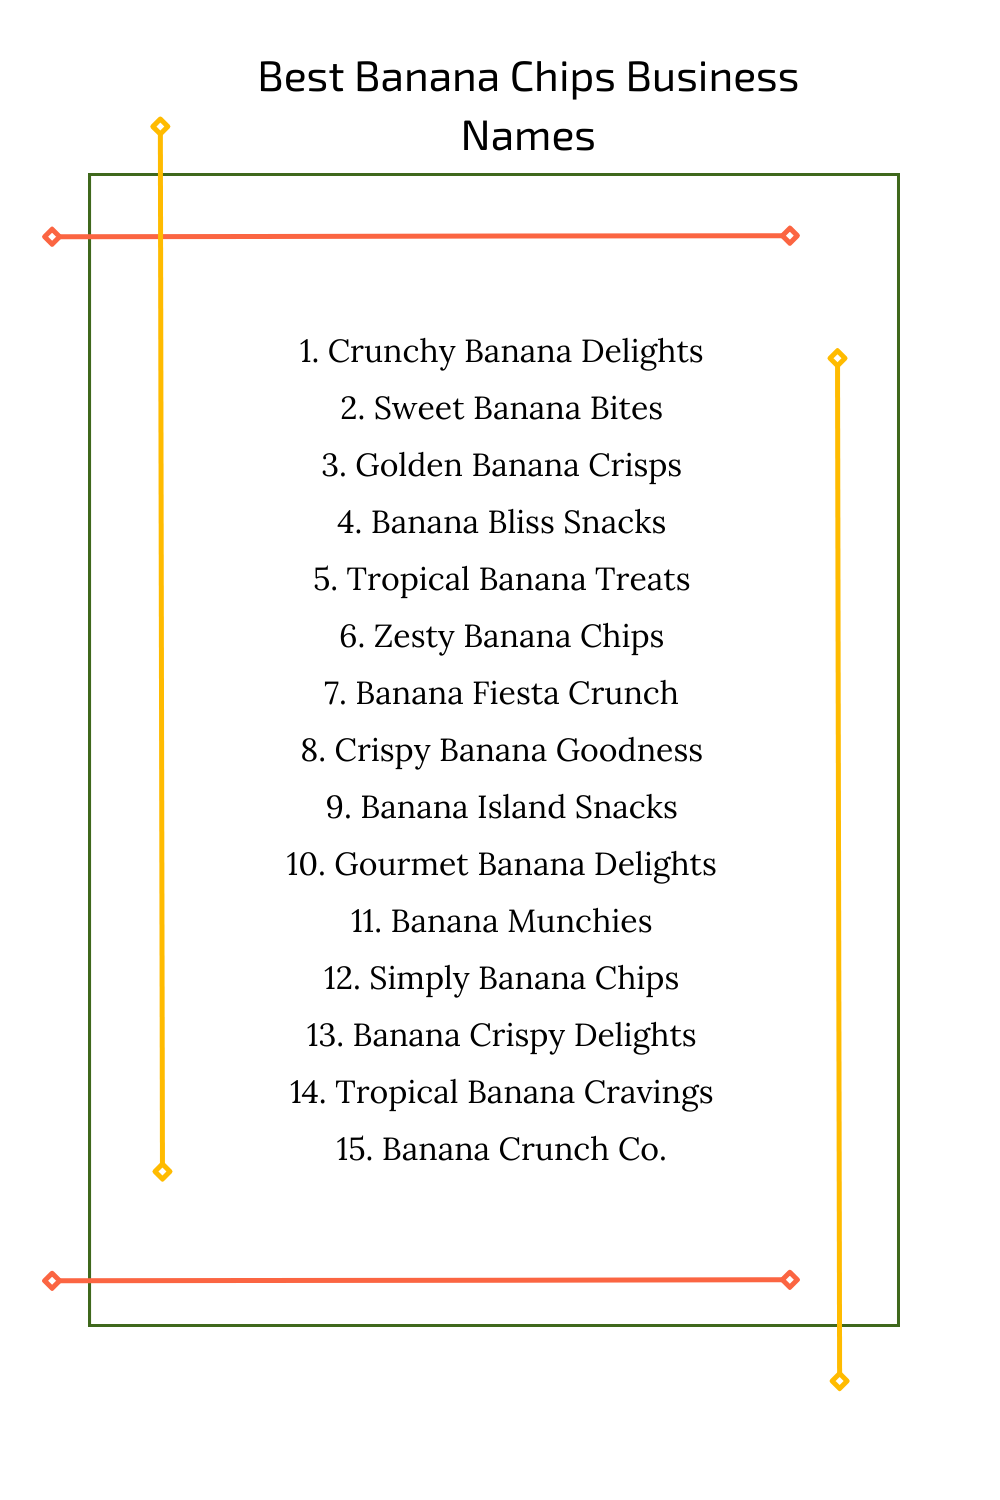 Best Banana Chips Business Names